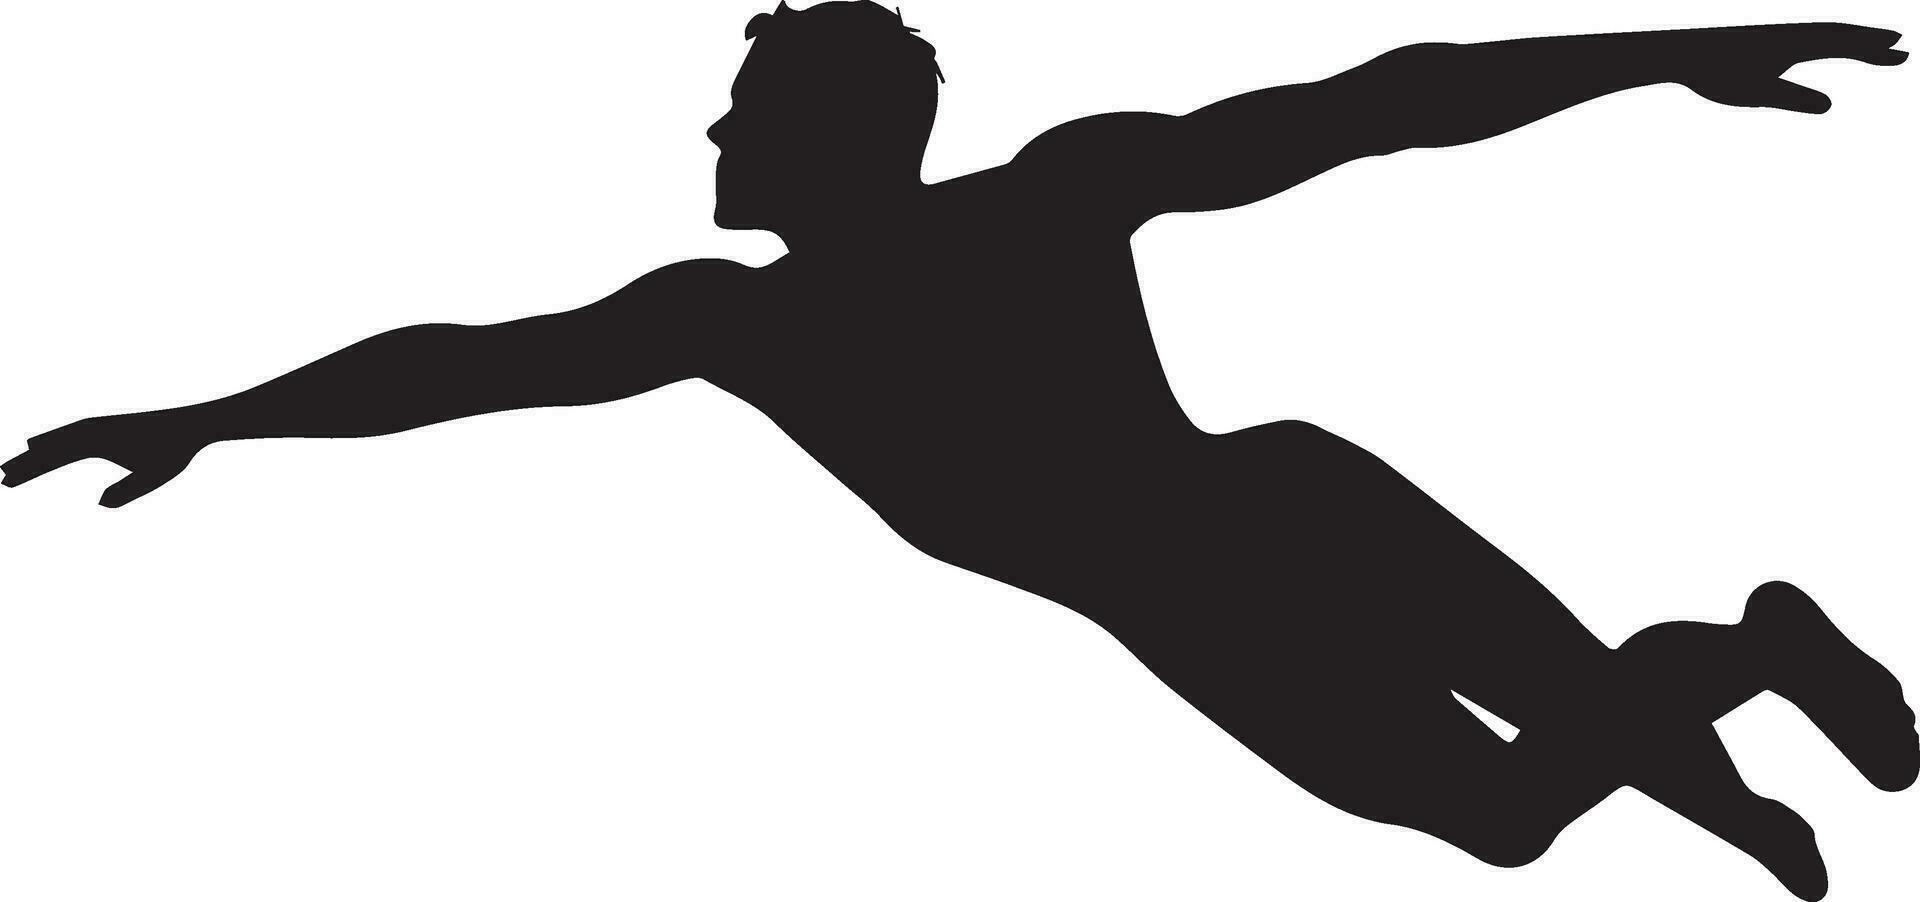 a swimmer swimming pose vector silhouette illustration